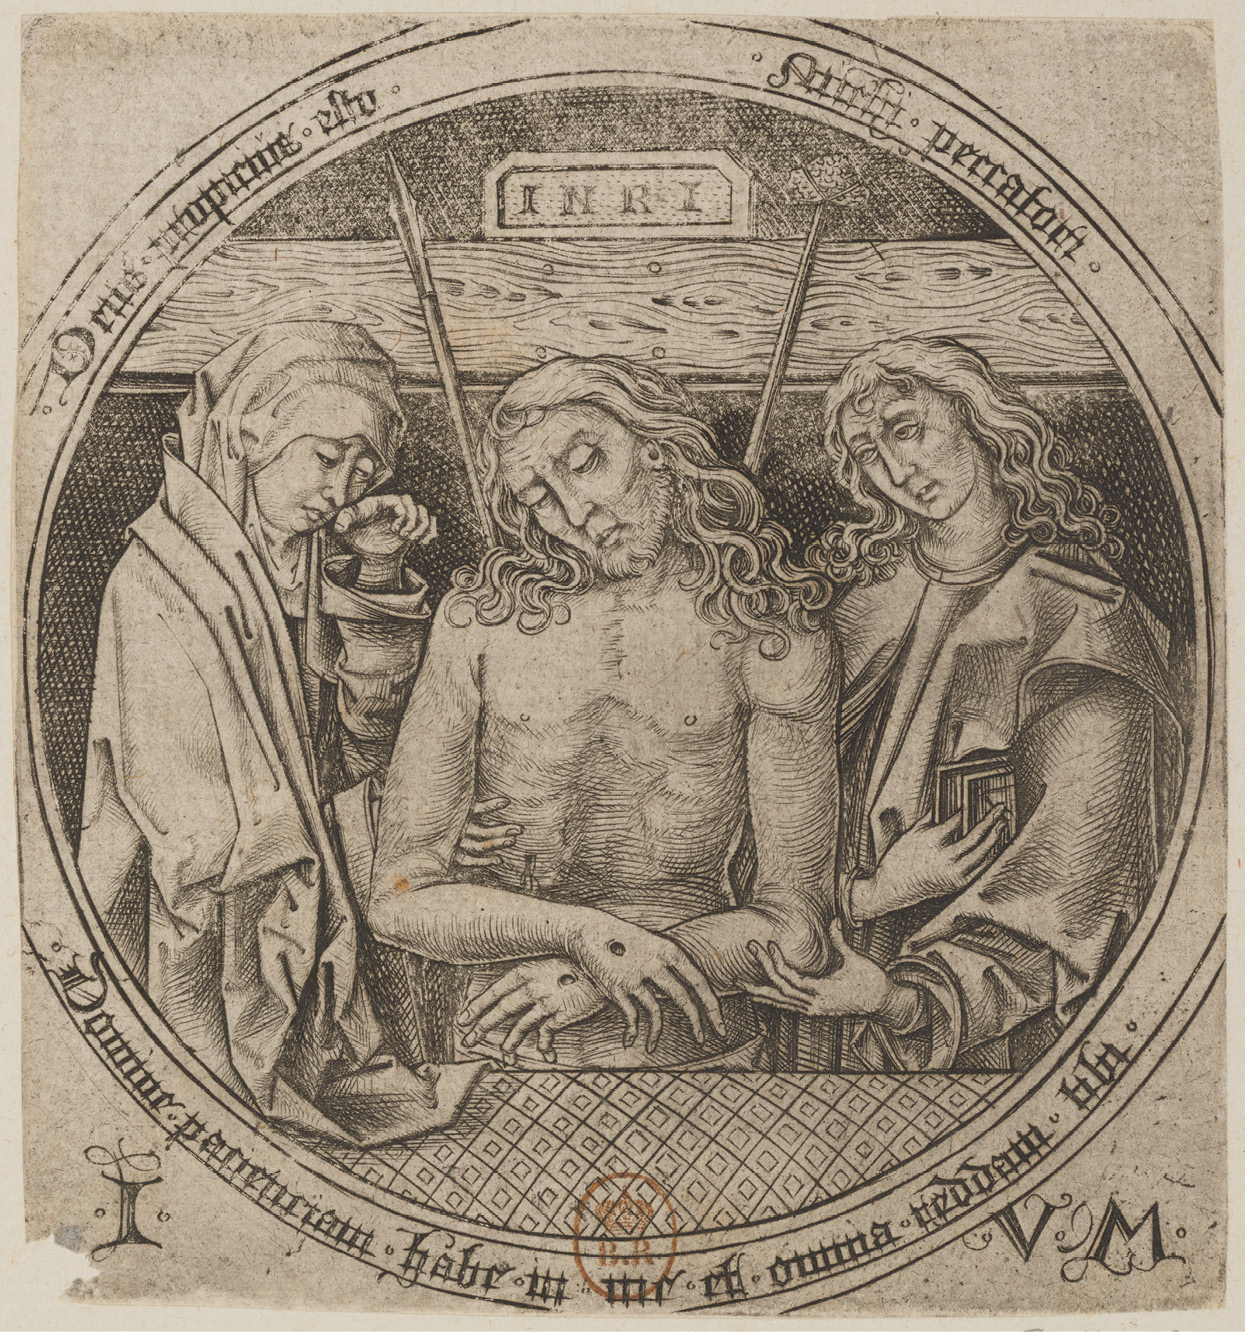 Fig. 63  Israhel van Meckenem, Christ as Man of Sorrows, engraving. Paris, BnF, Département des Estampes, Ea48Res. Published with kind permission from the Bibliothèque nationale de France.